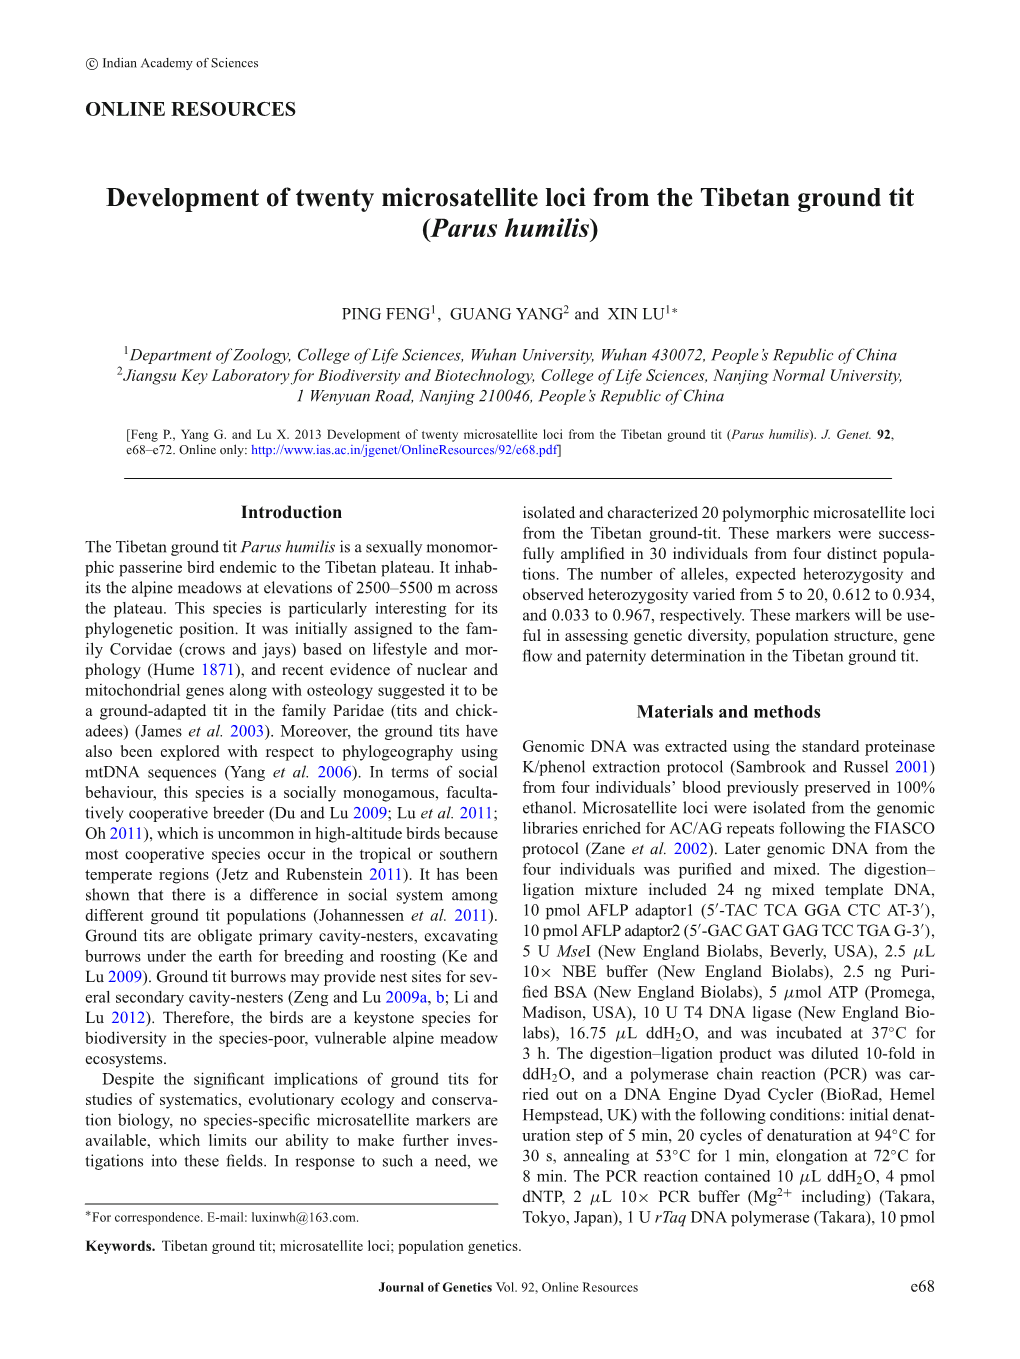 Development of Twenty Microsatellite Loci from the Tibetan Ground Tit (Parus Humilis)